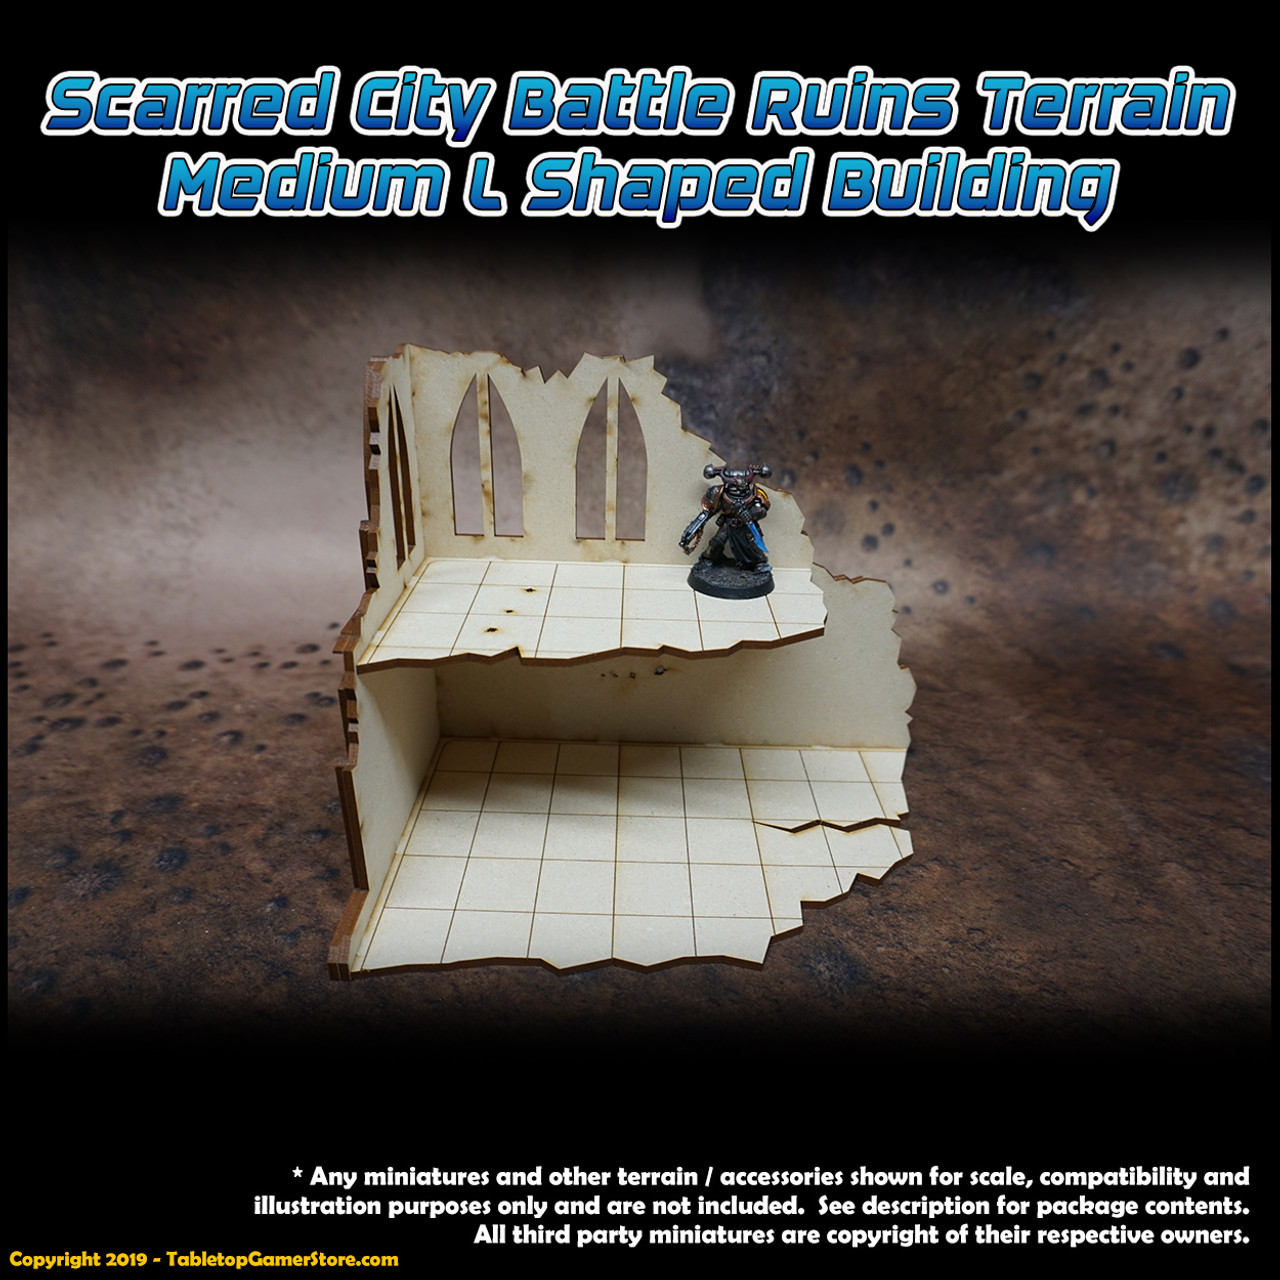 Scarred City Battle Ruins Terrain - Medium L Shaped Building